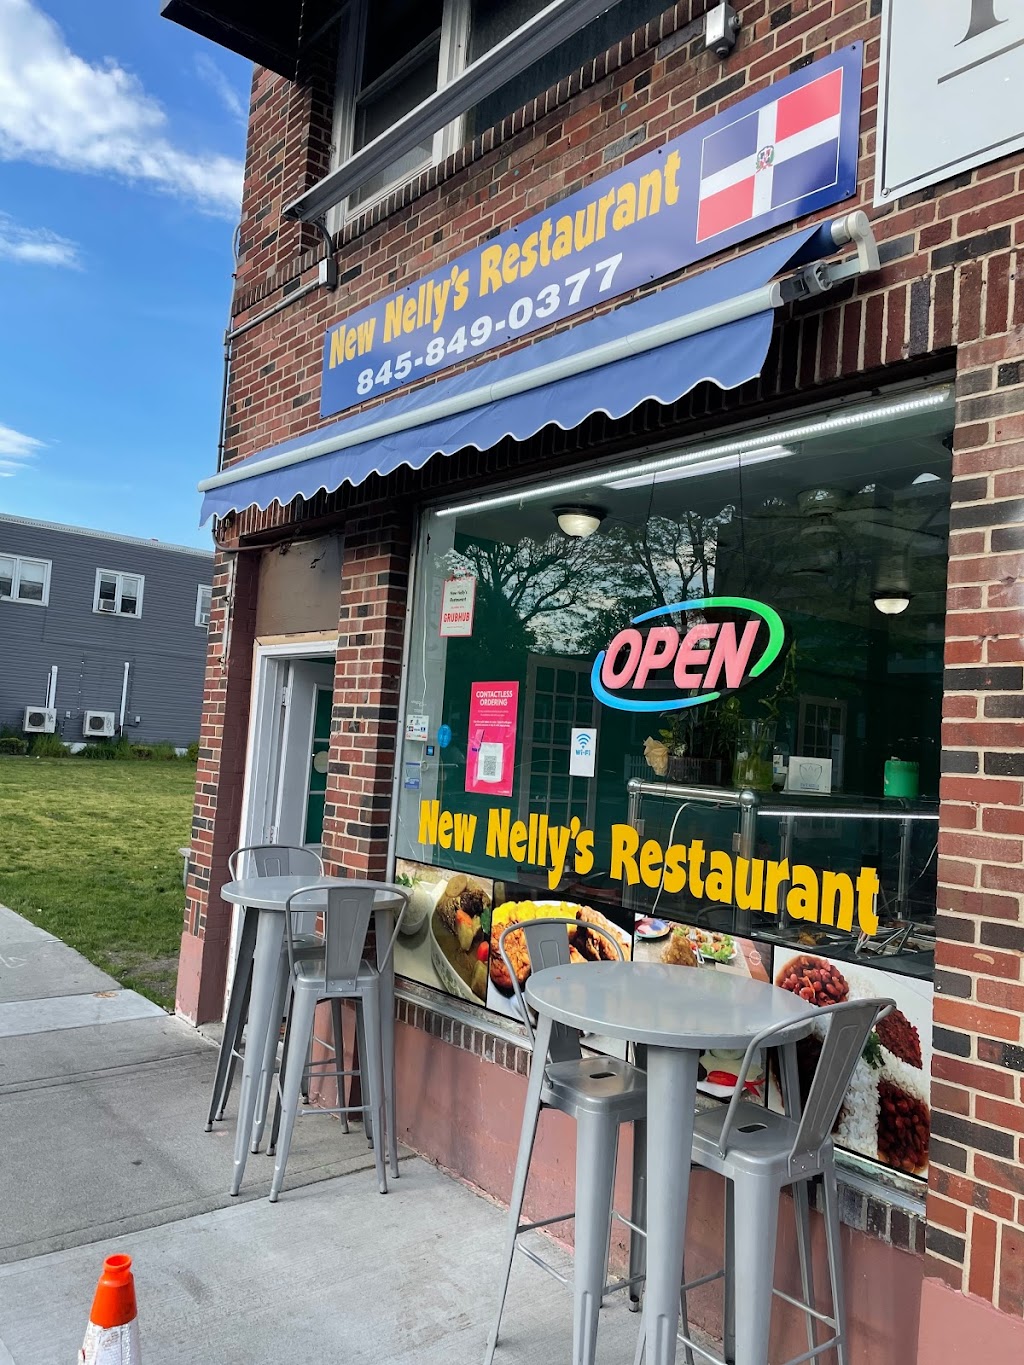 New Nellys Restaurant | 50 Raymond Ave, Poughkeepsie, NY 12603 | Phone: (845) 849-0377